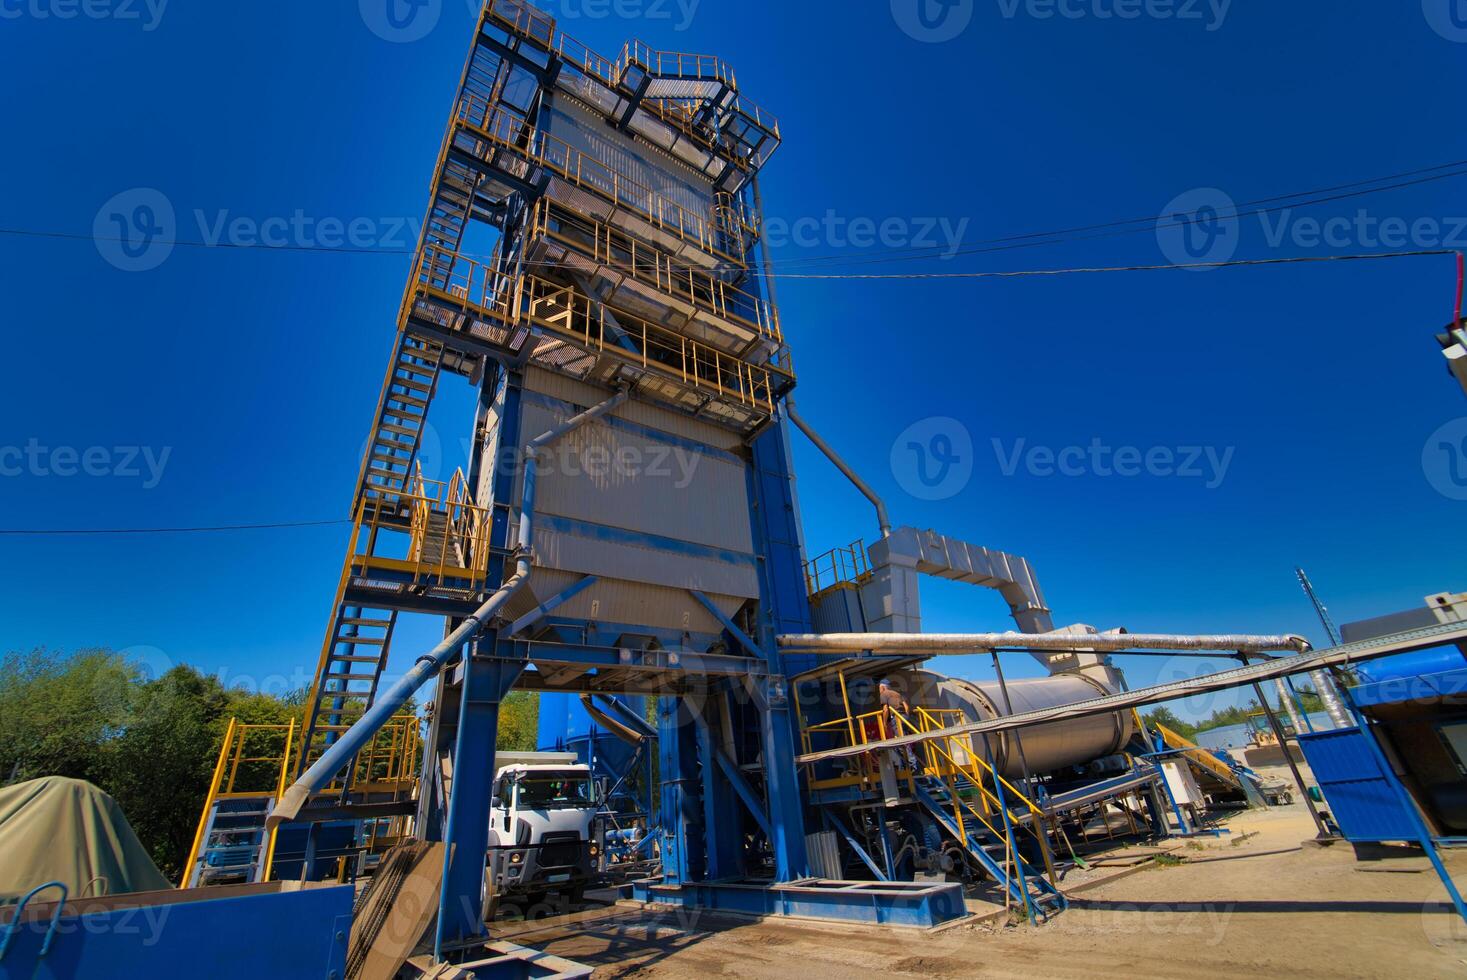 Factory for asphalt production on blue sky background. Selective focus. photo